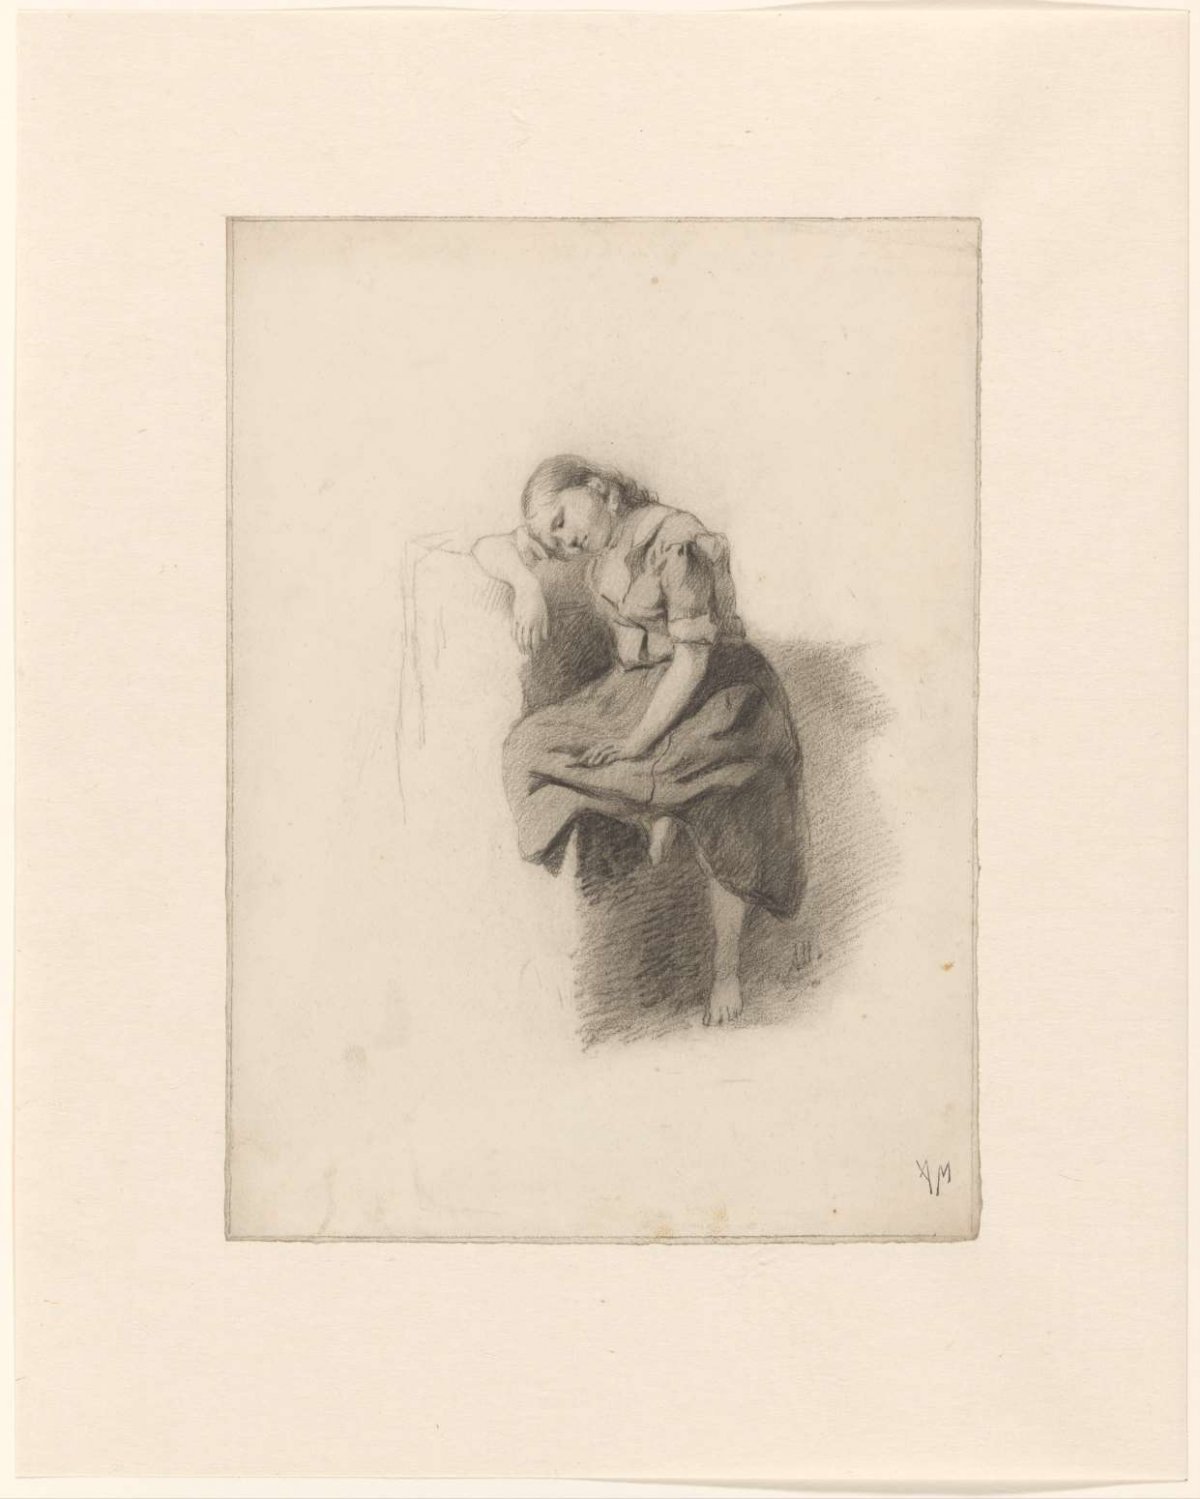 Resting girl, Anton Mauve, 1848 - 1888